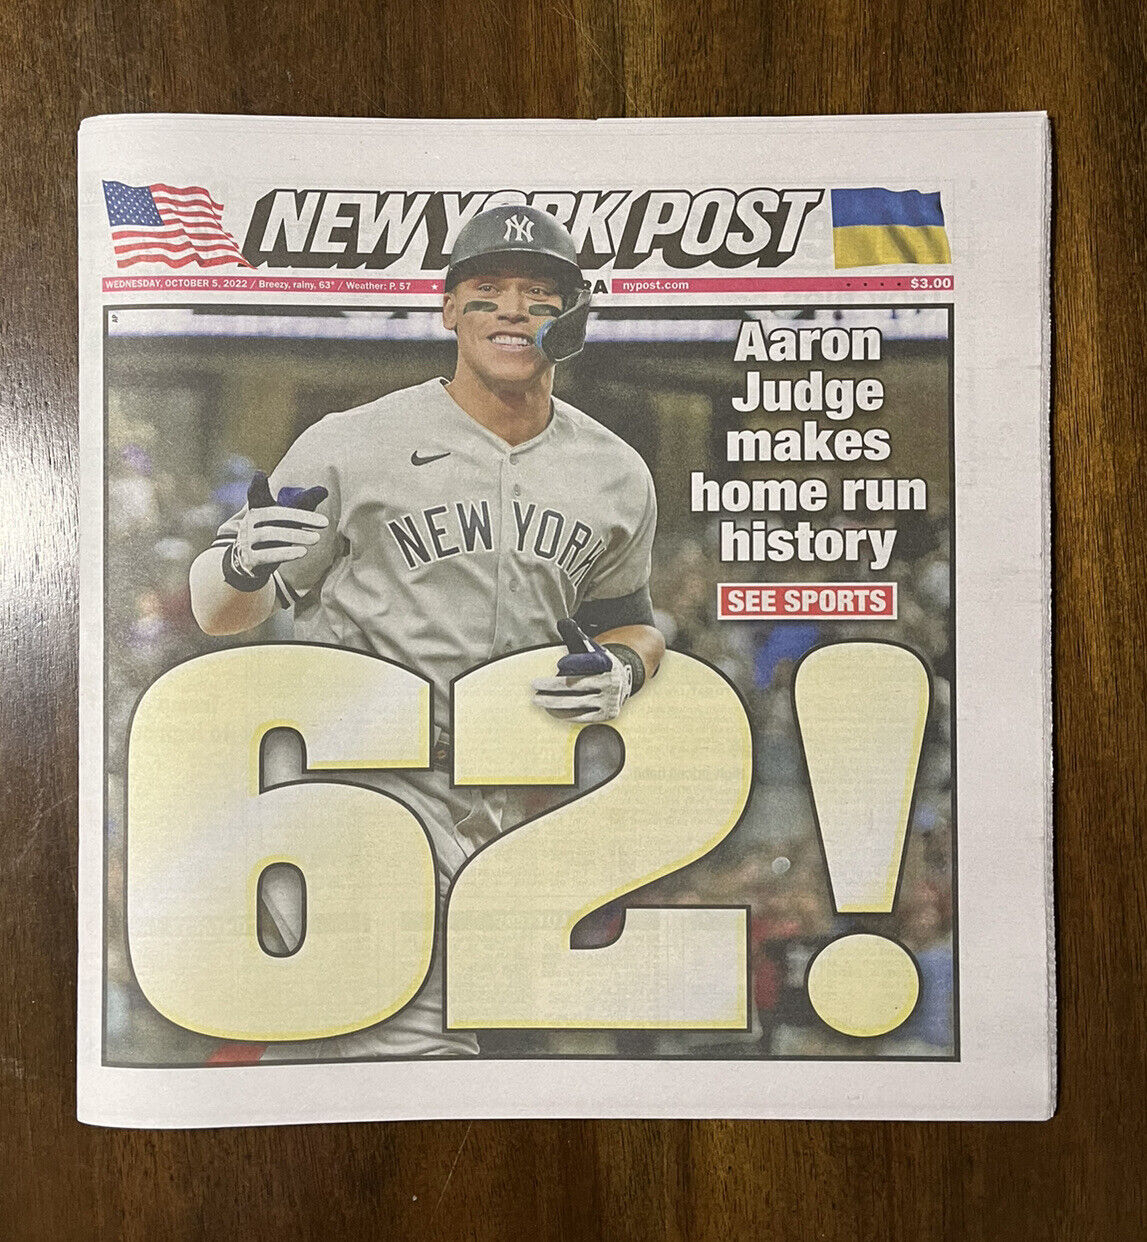 Aaron Judge 62 HRs 1 New York Post October 5th  2022 Newspaper Yankees